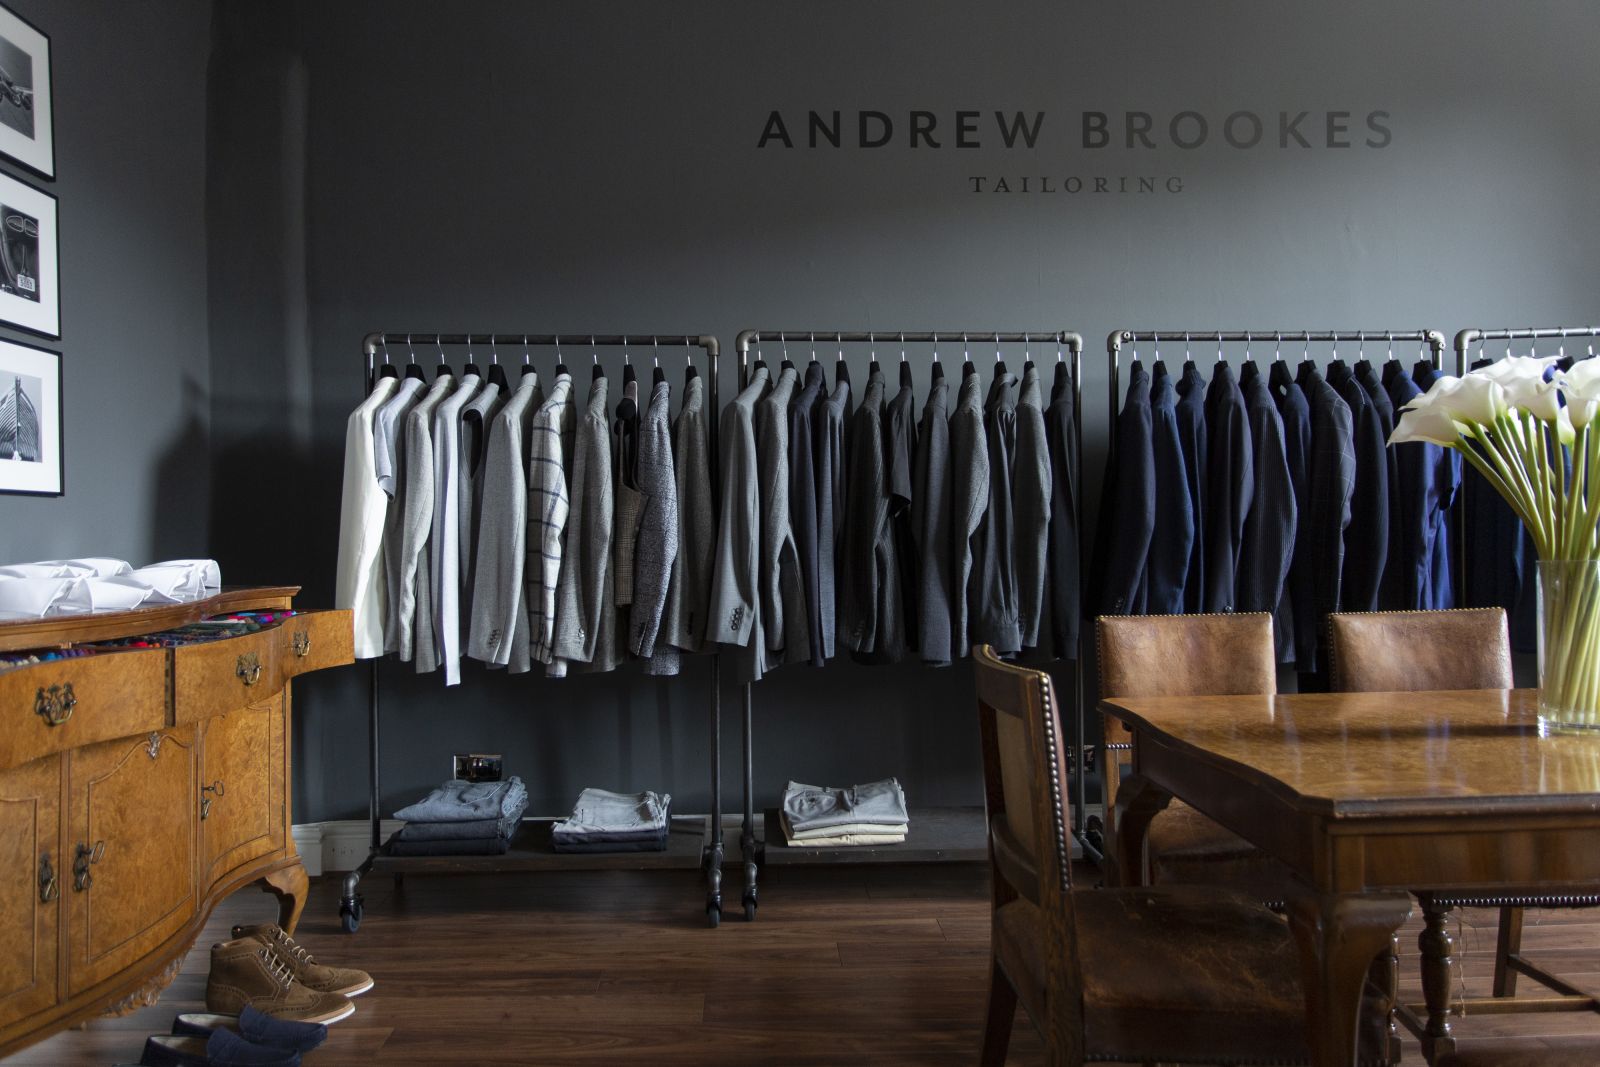 Andrew Brookes Tailoring Studio 2019